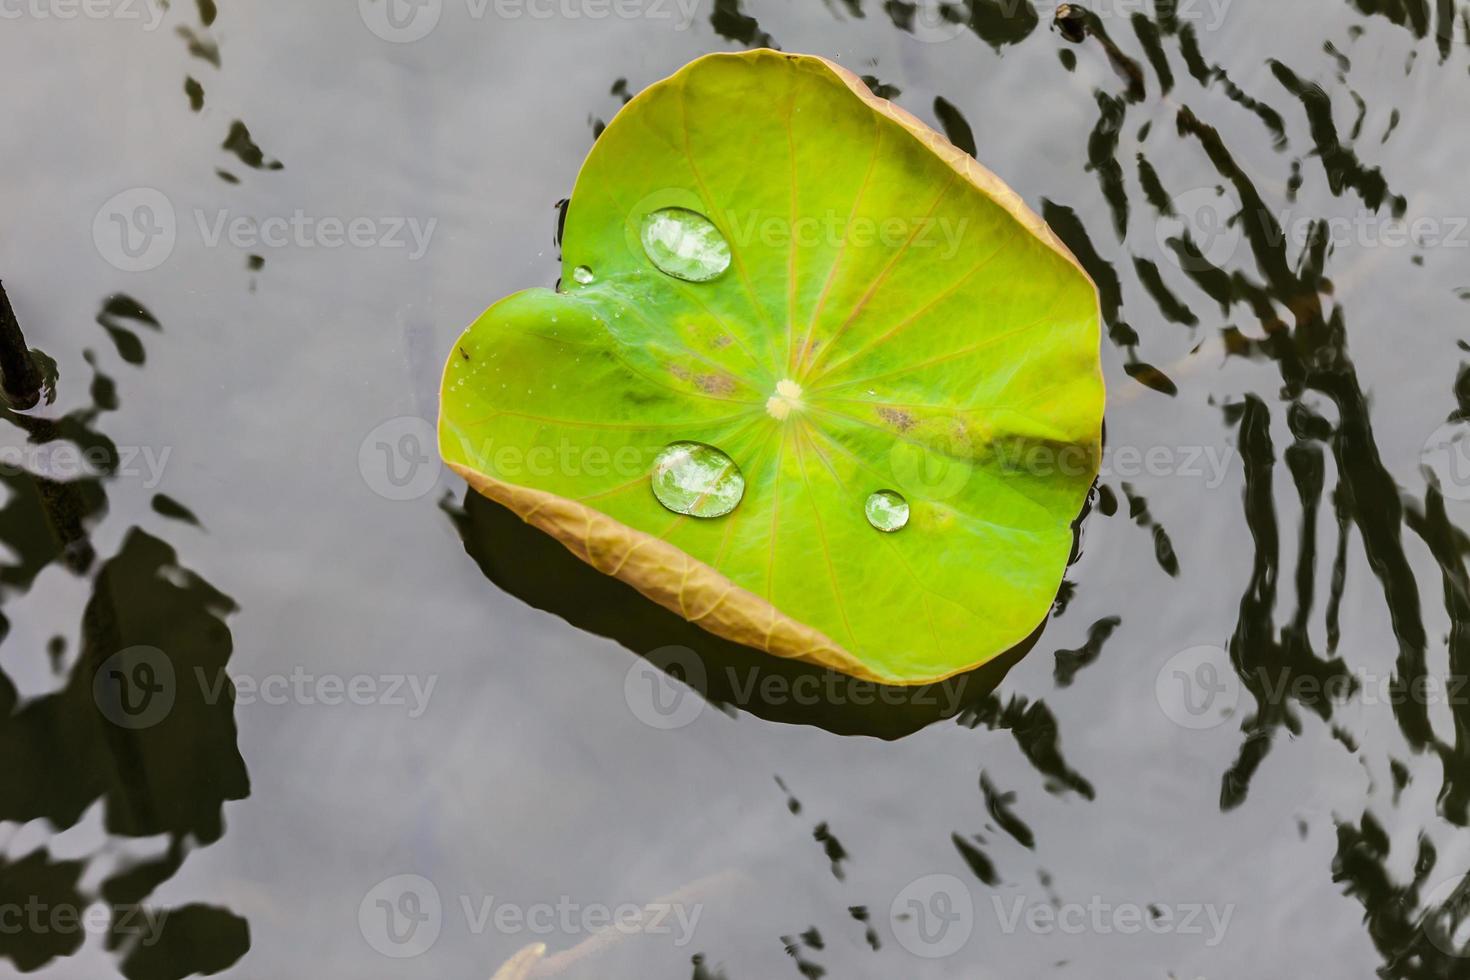 hoja de loto verde con gota de agua foto